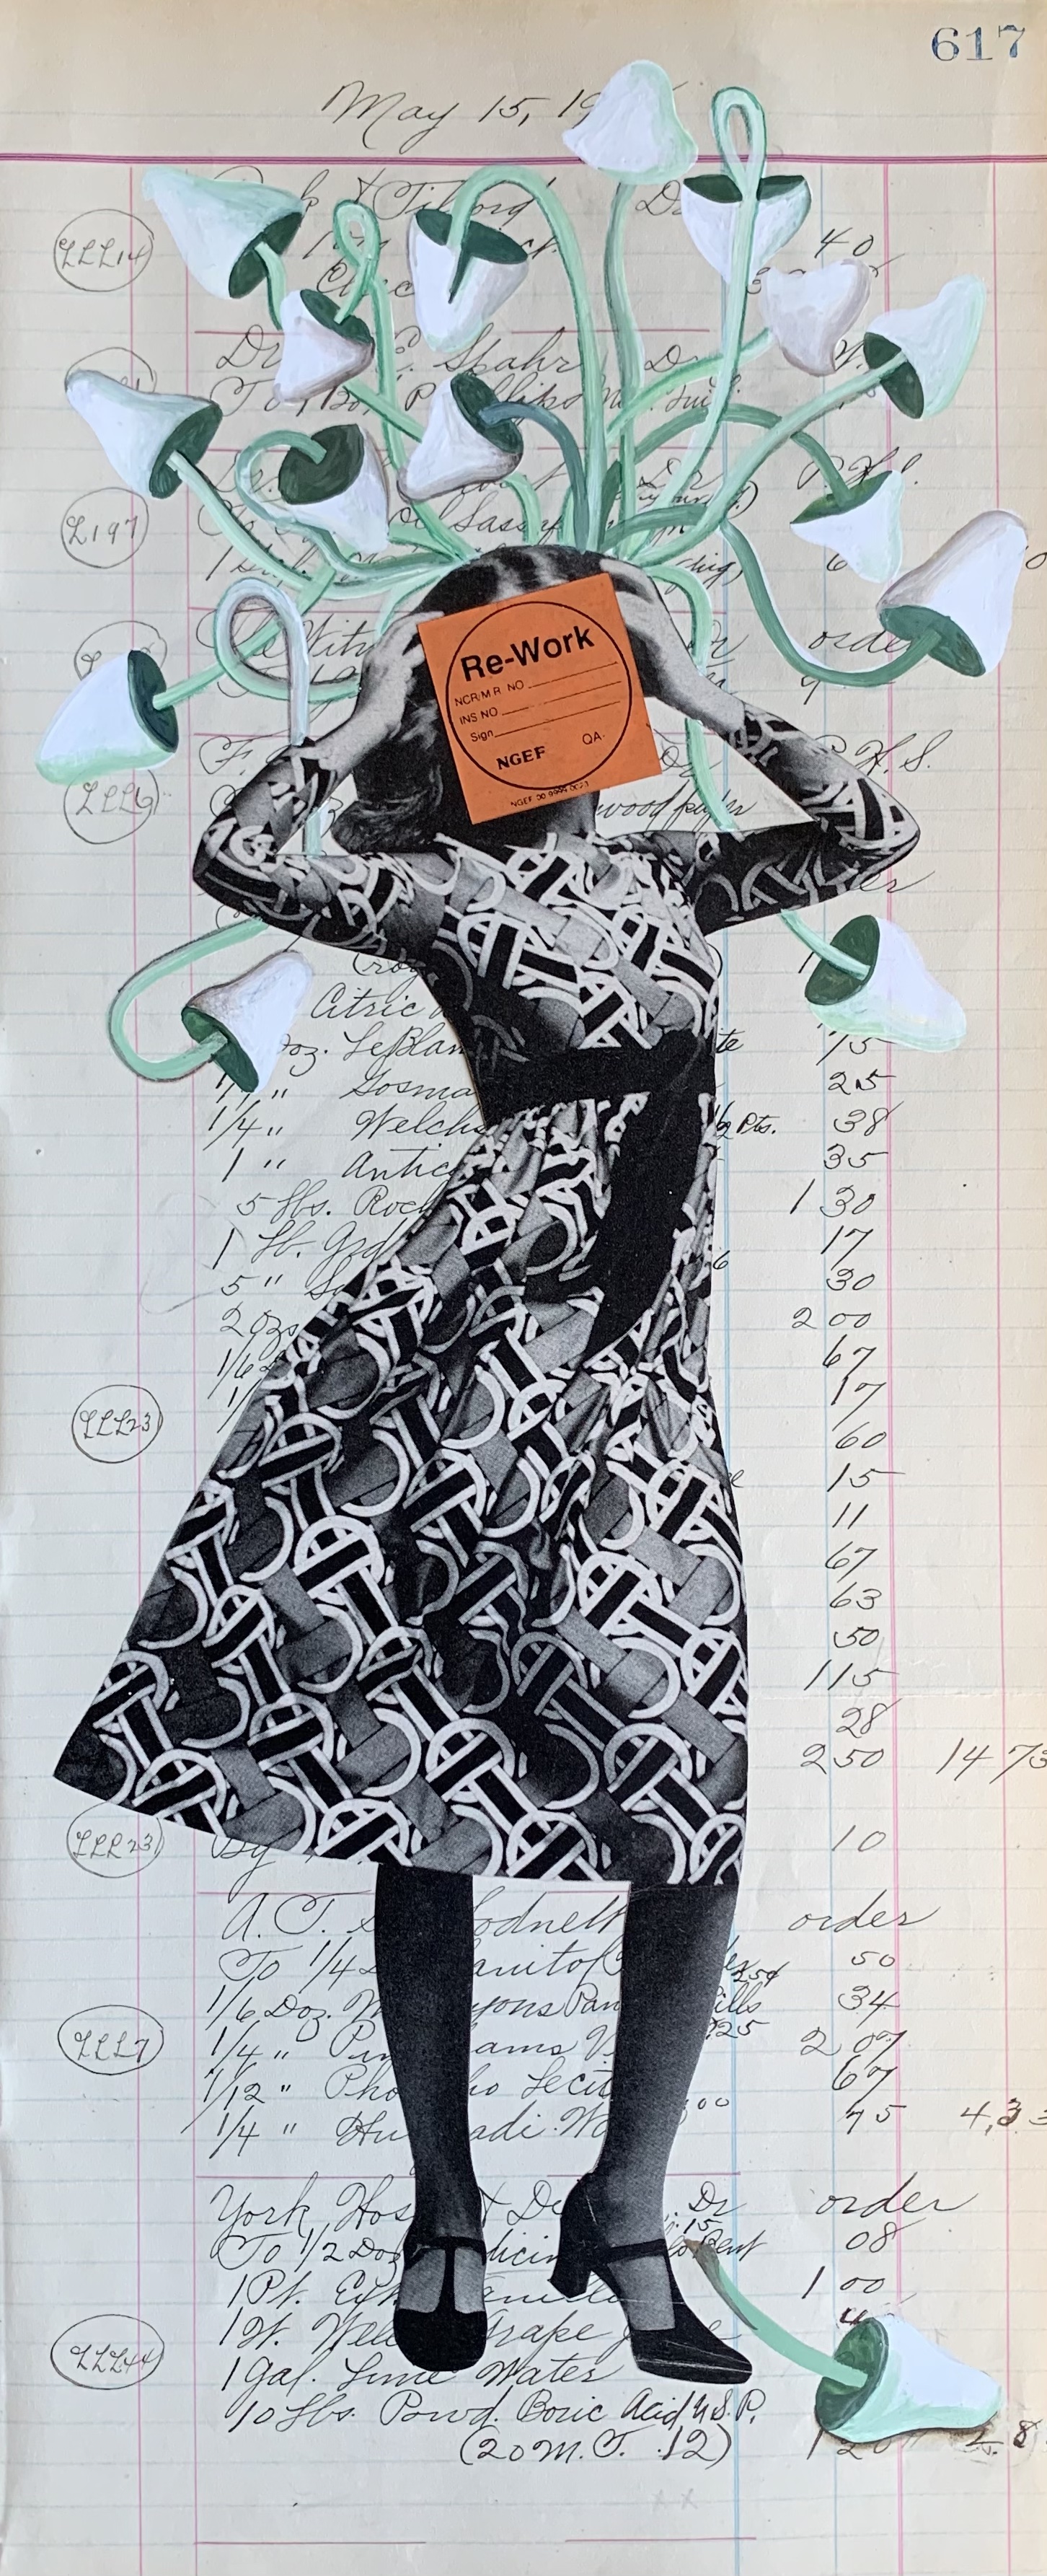 Bakula Nayak, contempoary artist, collage and drawing